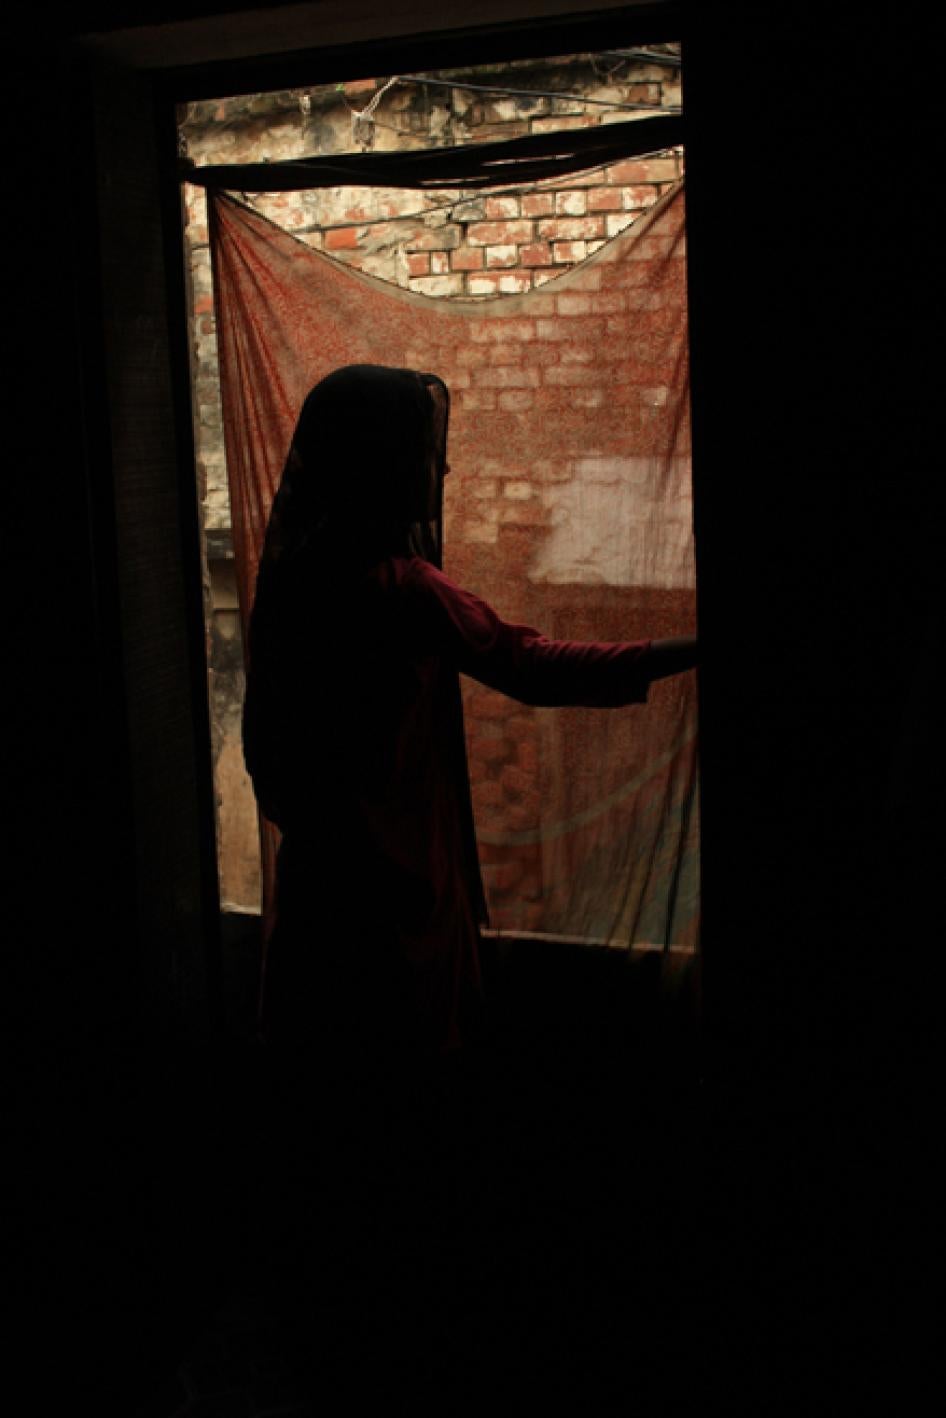 Six Video Jabardasti Rep - South Asia Failing to Address Its Child Rape Problem | Human Rights Watch